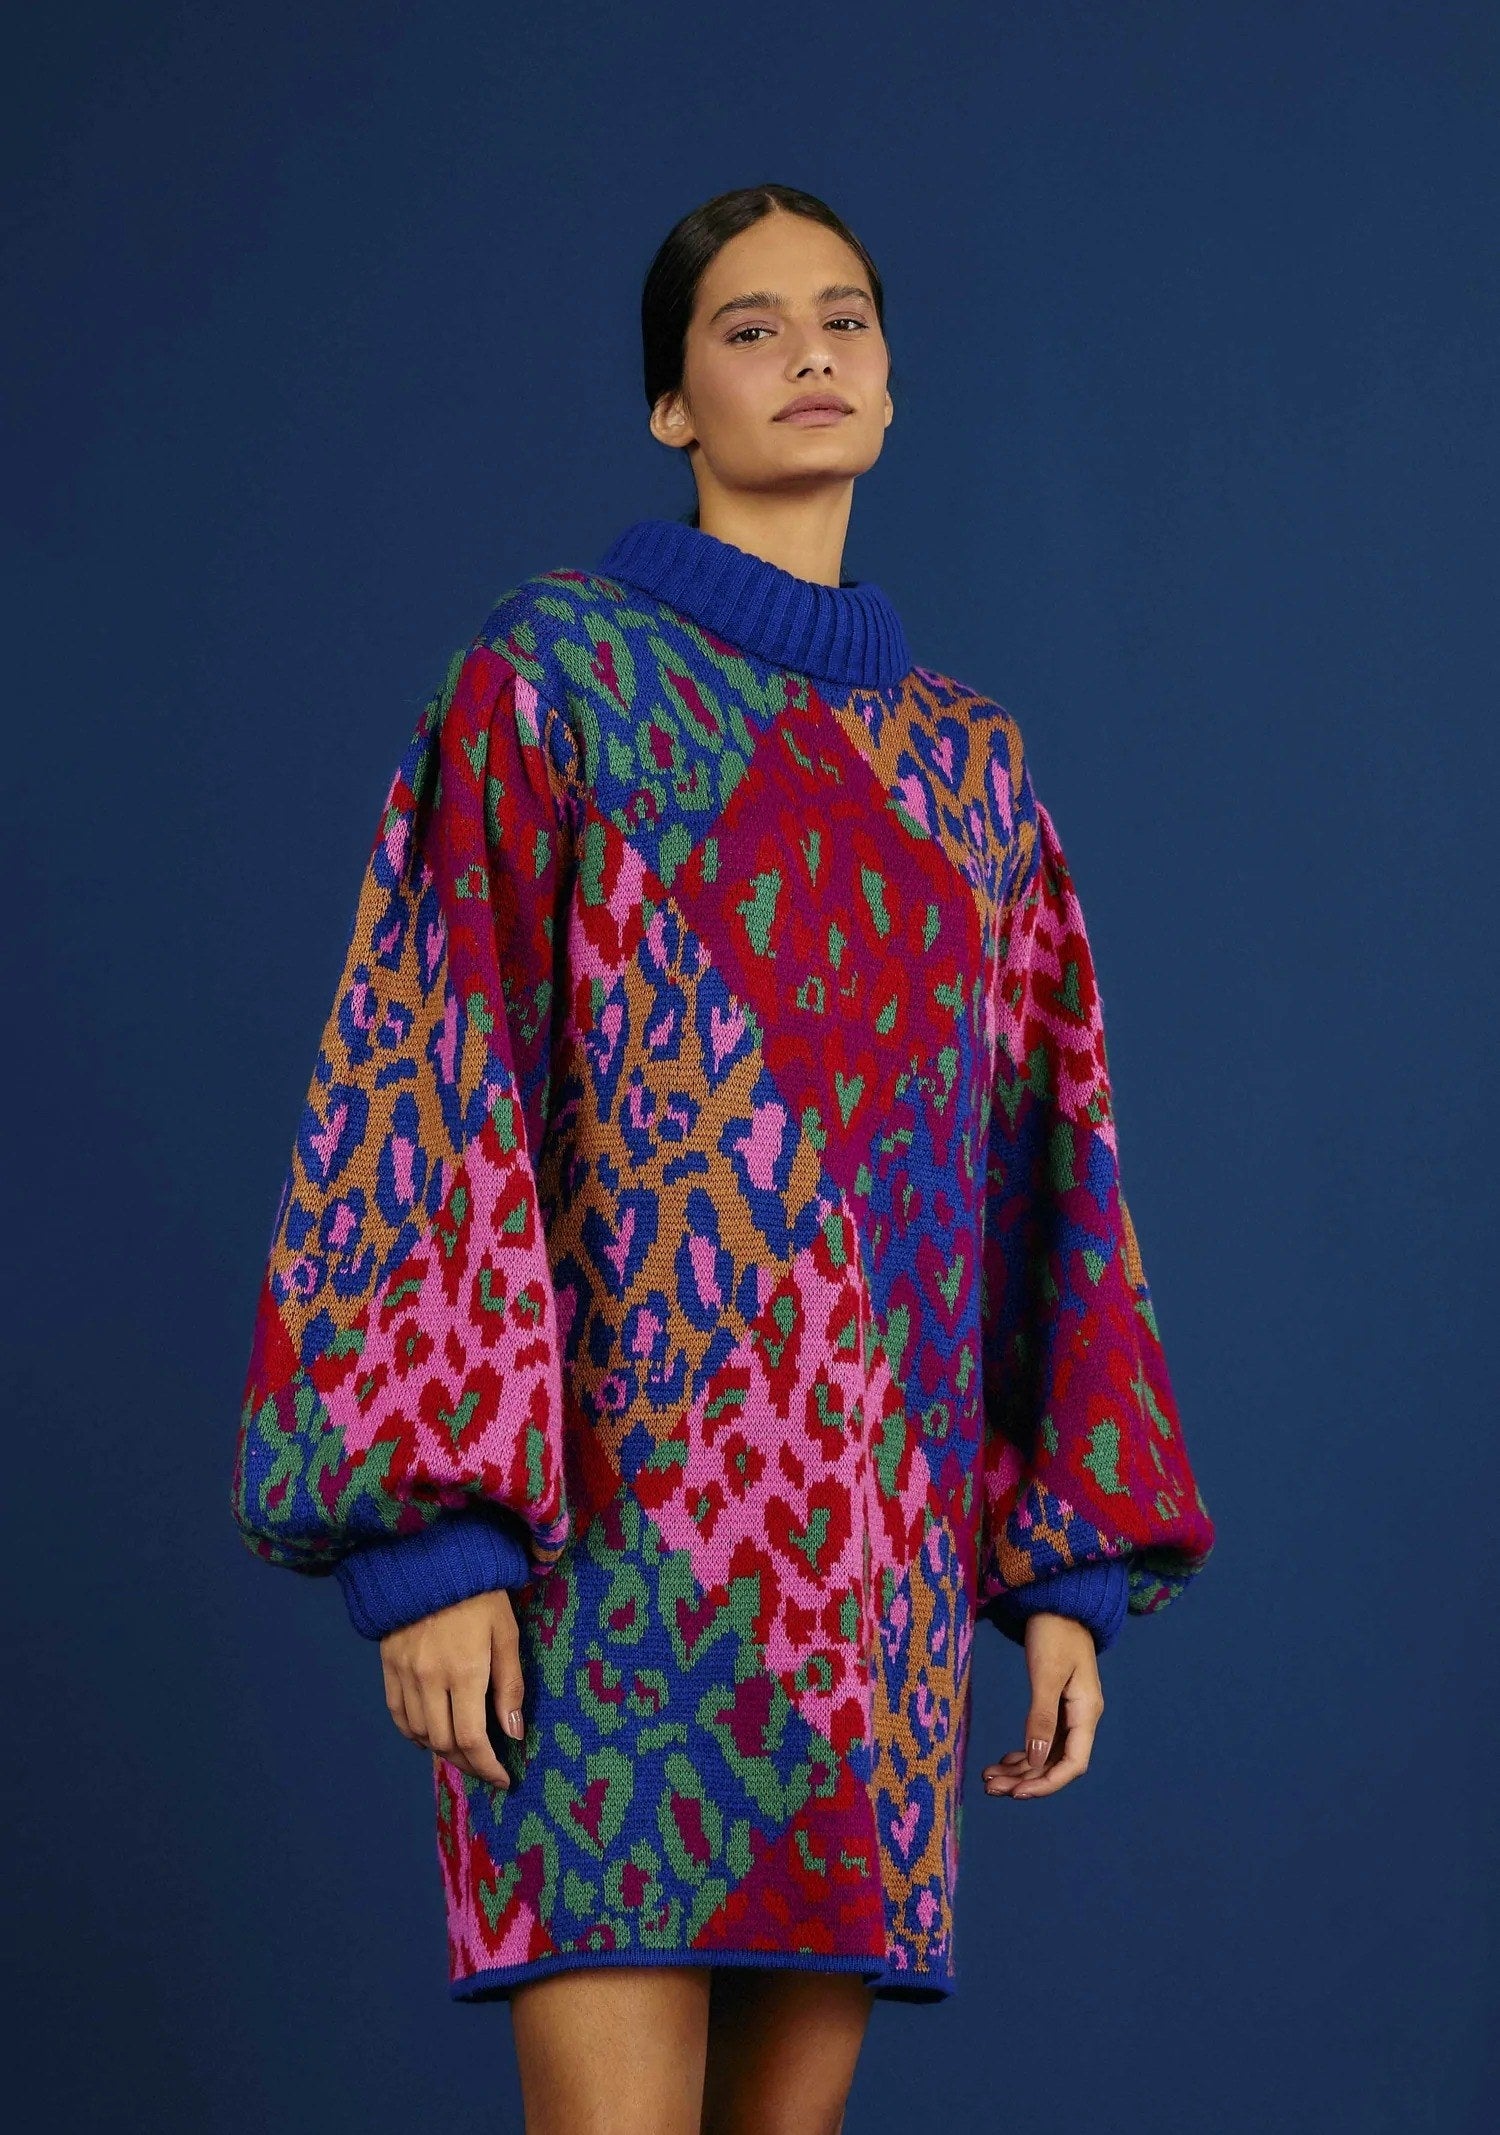 a model wearing a colorful leopard-print sweater dress